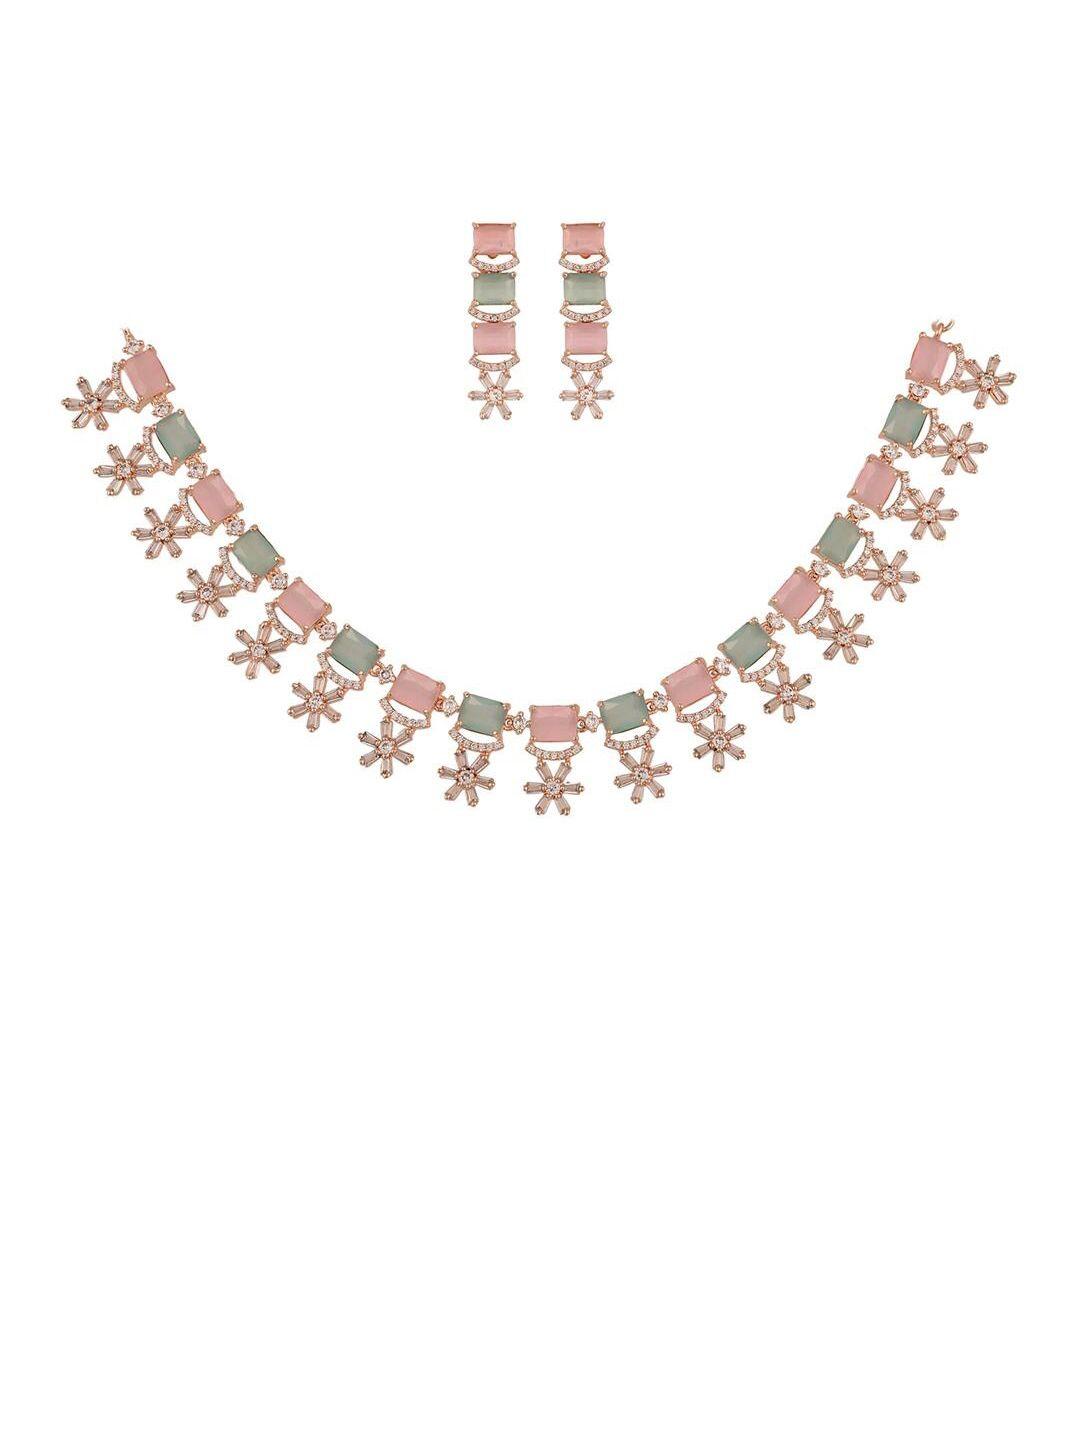 ratnavali jewels rose gold-plated cz-studded jewellery set